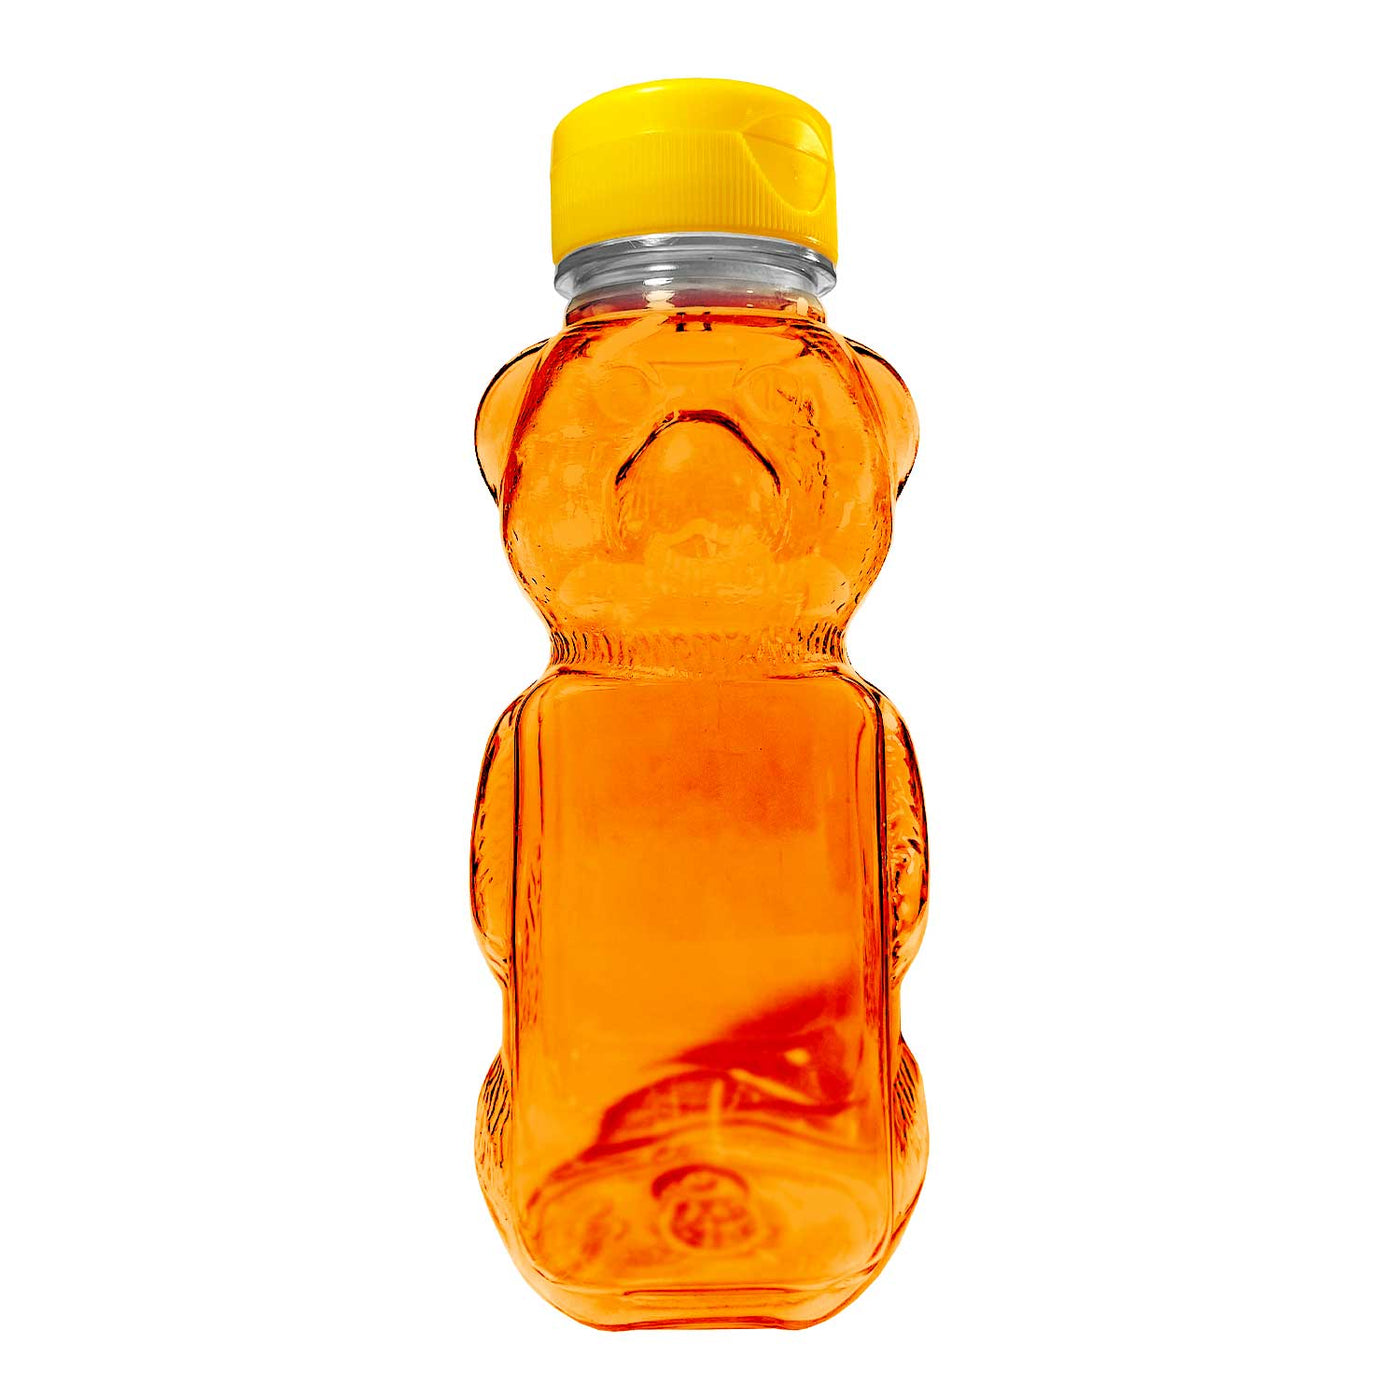 Bear bottle of 12 oz filled with honey